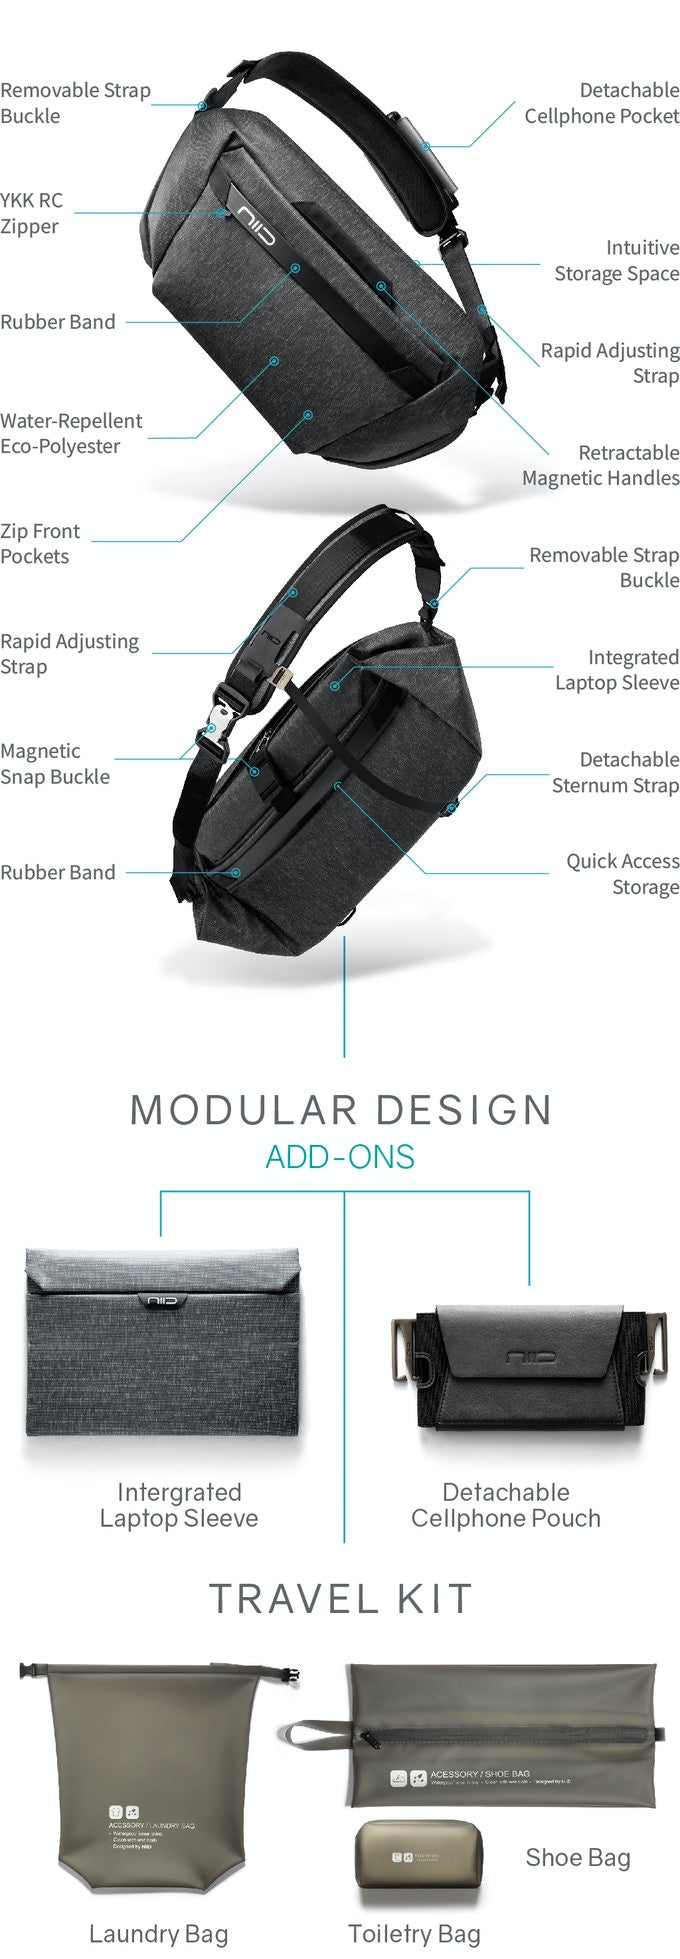 NIID - CACHE Hybrid Tech Sling & Duffle 單肩包/行李袋混合體 - 早鳥優惠價